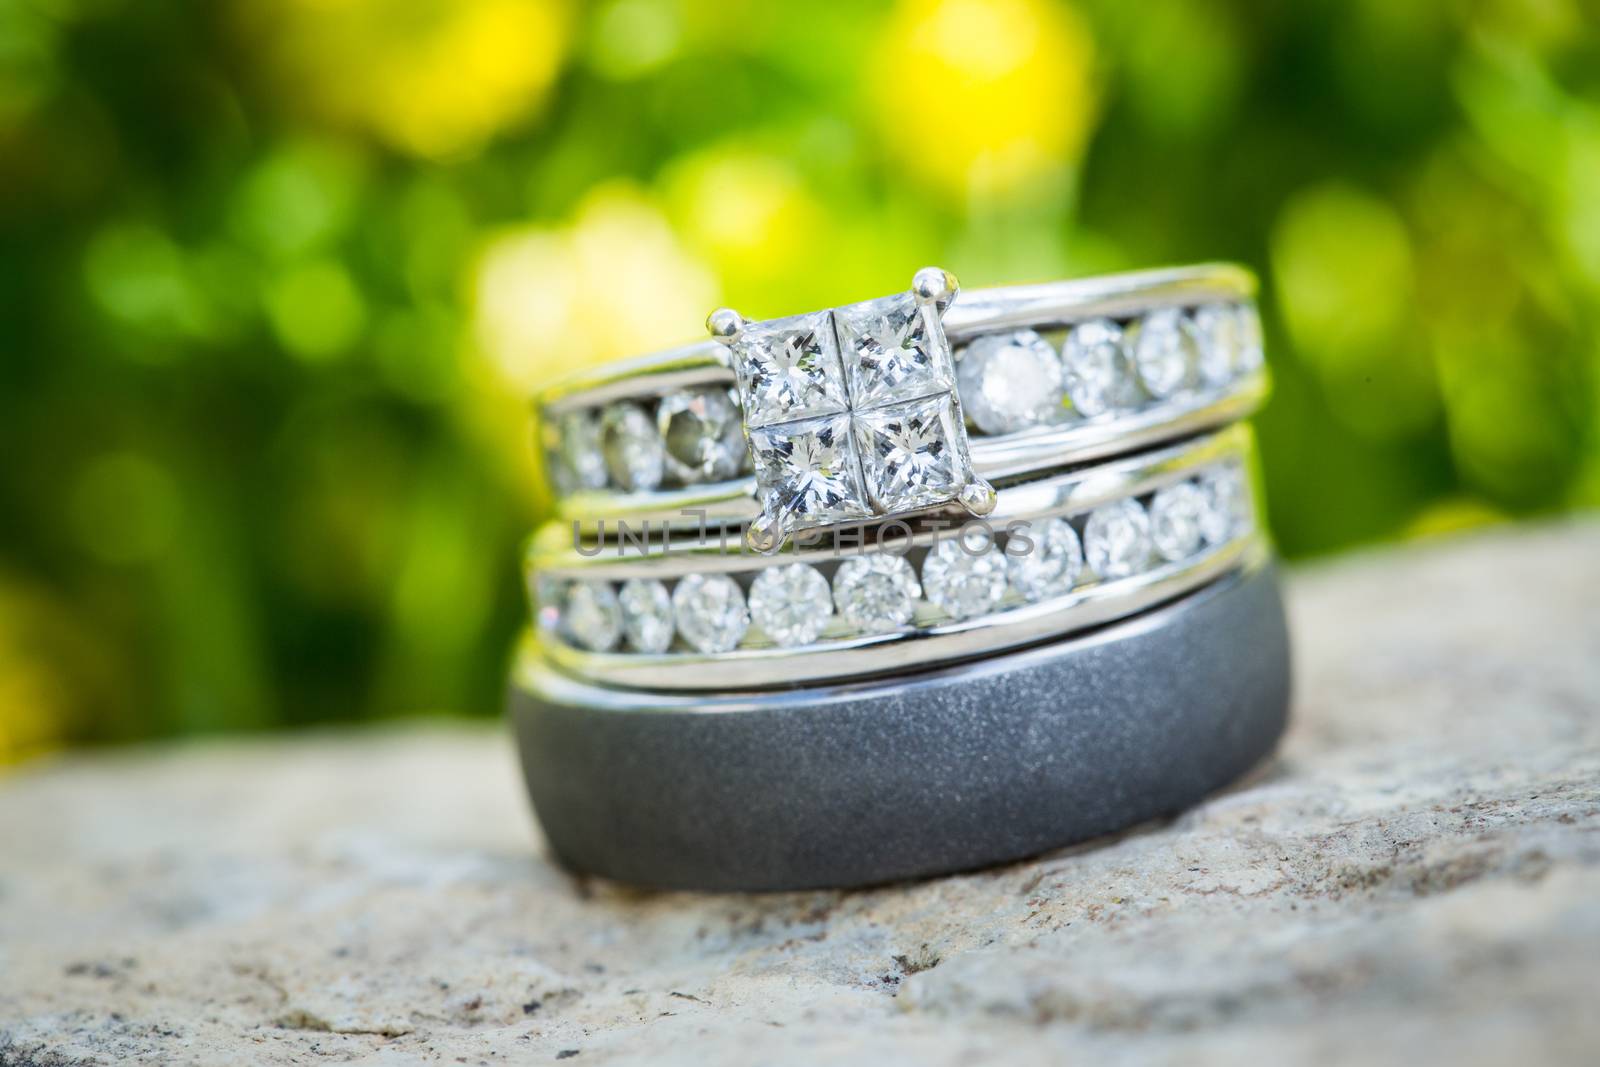 Diamond Wedding Ring Set in Nature by salejandro